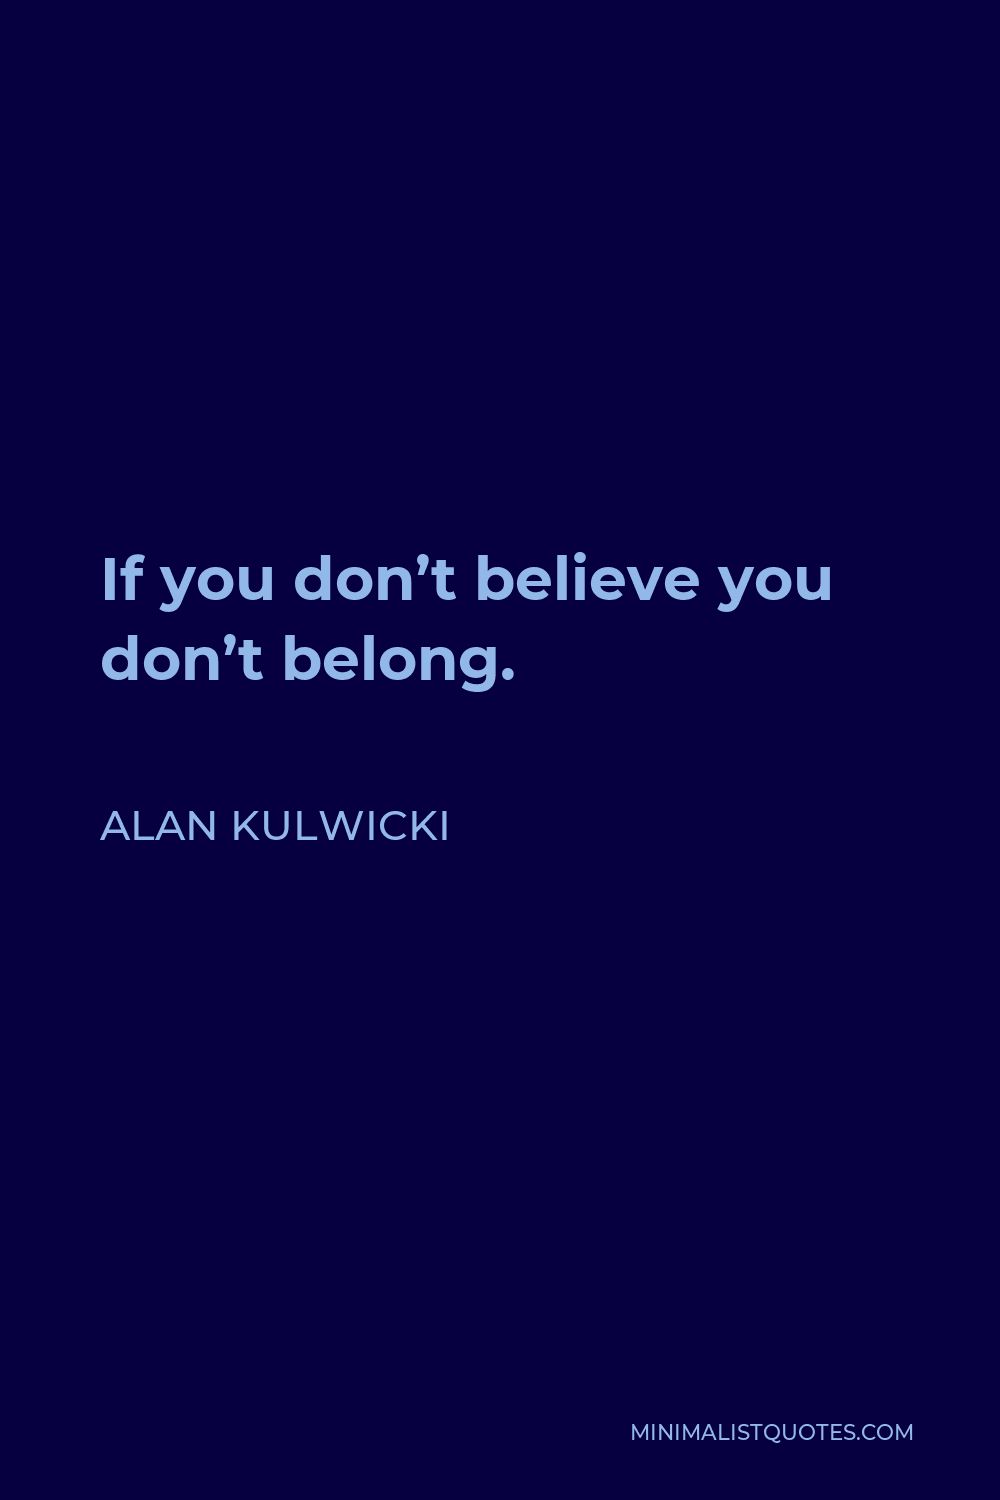 Alan Kulwicki Quote - If you don’t believe you don’t belong.